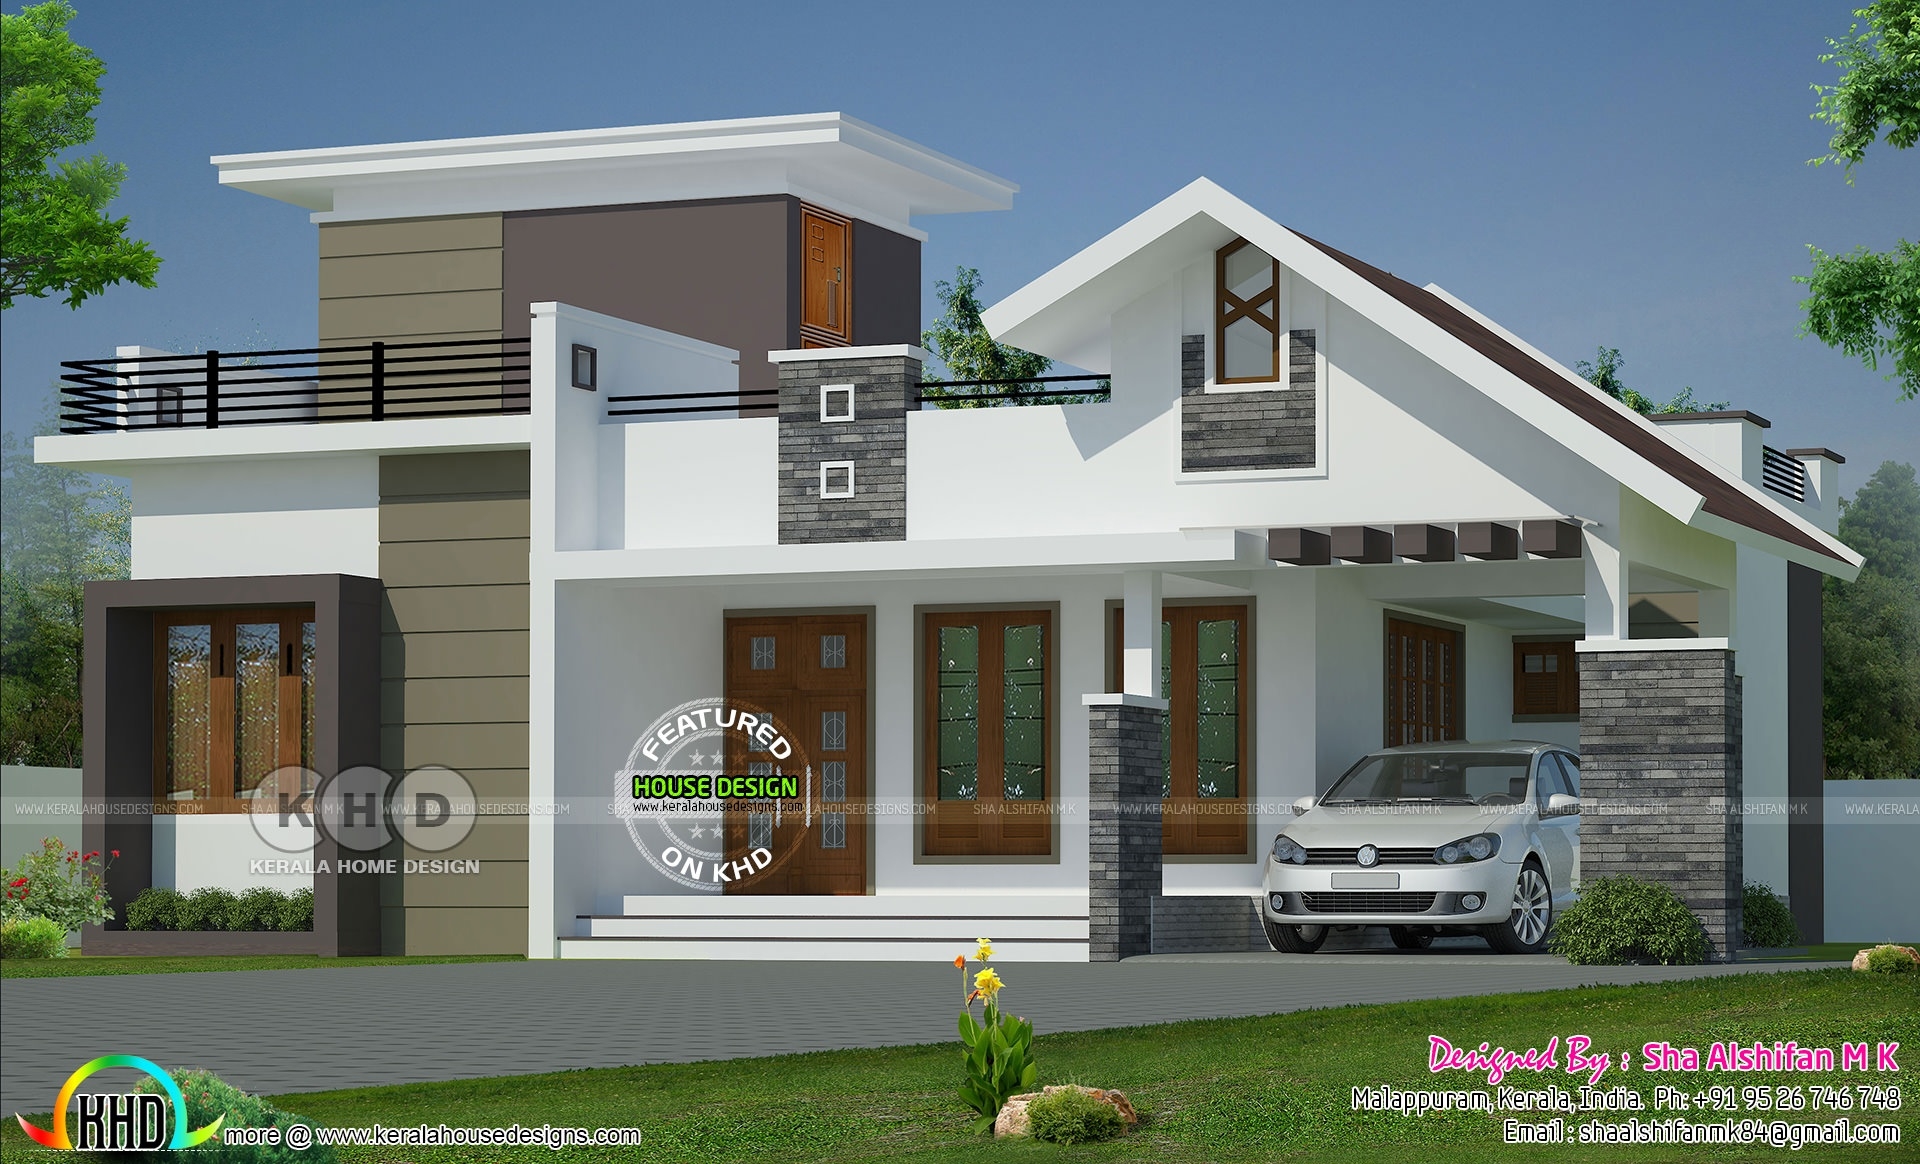 Brilliant 1132 sq ft 2 bedroom single floor home mixed roof kerala home design in single floor house design